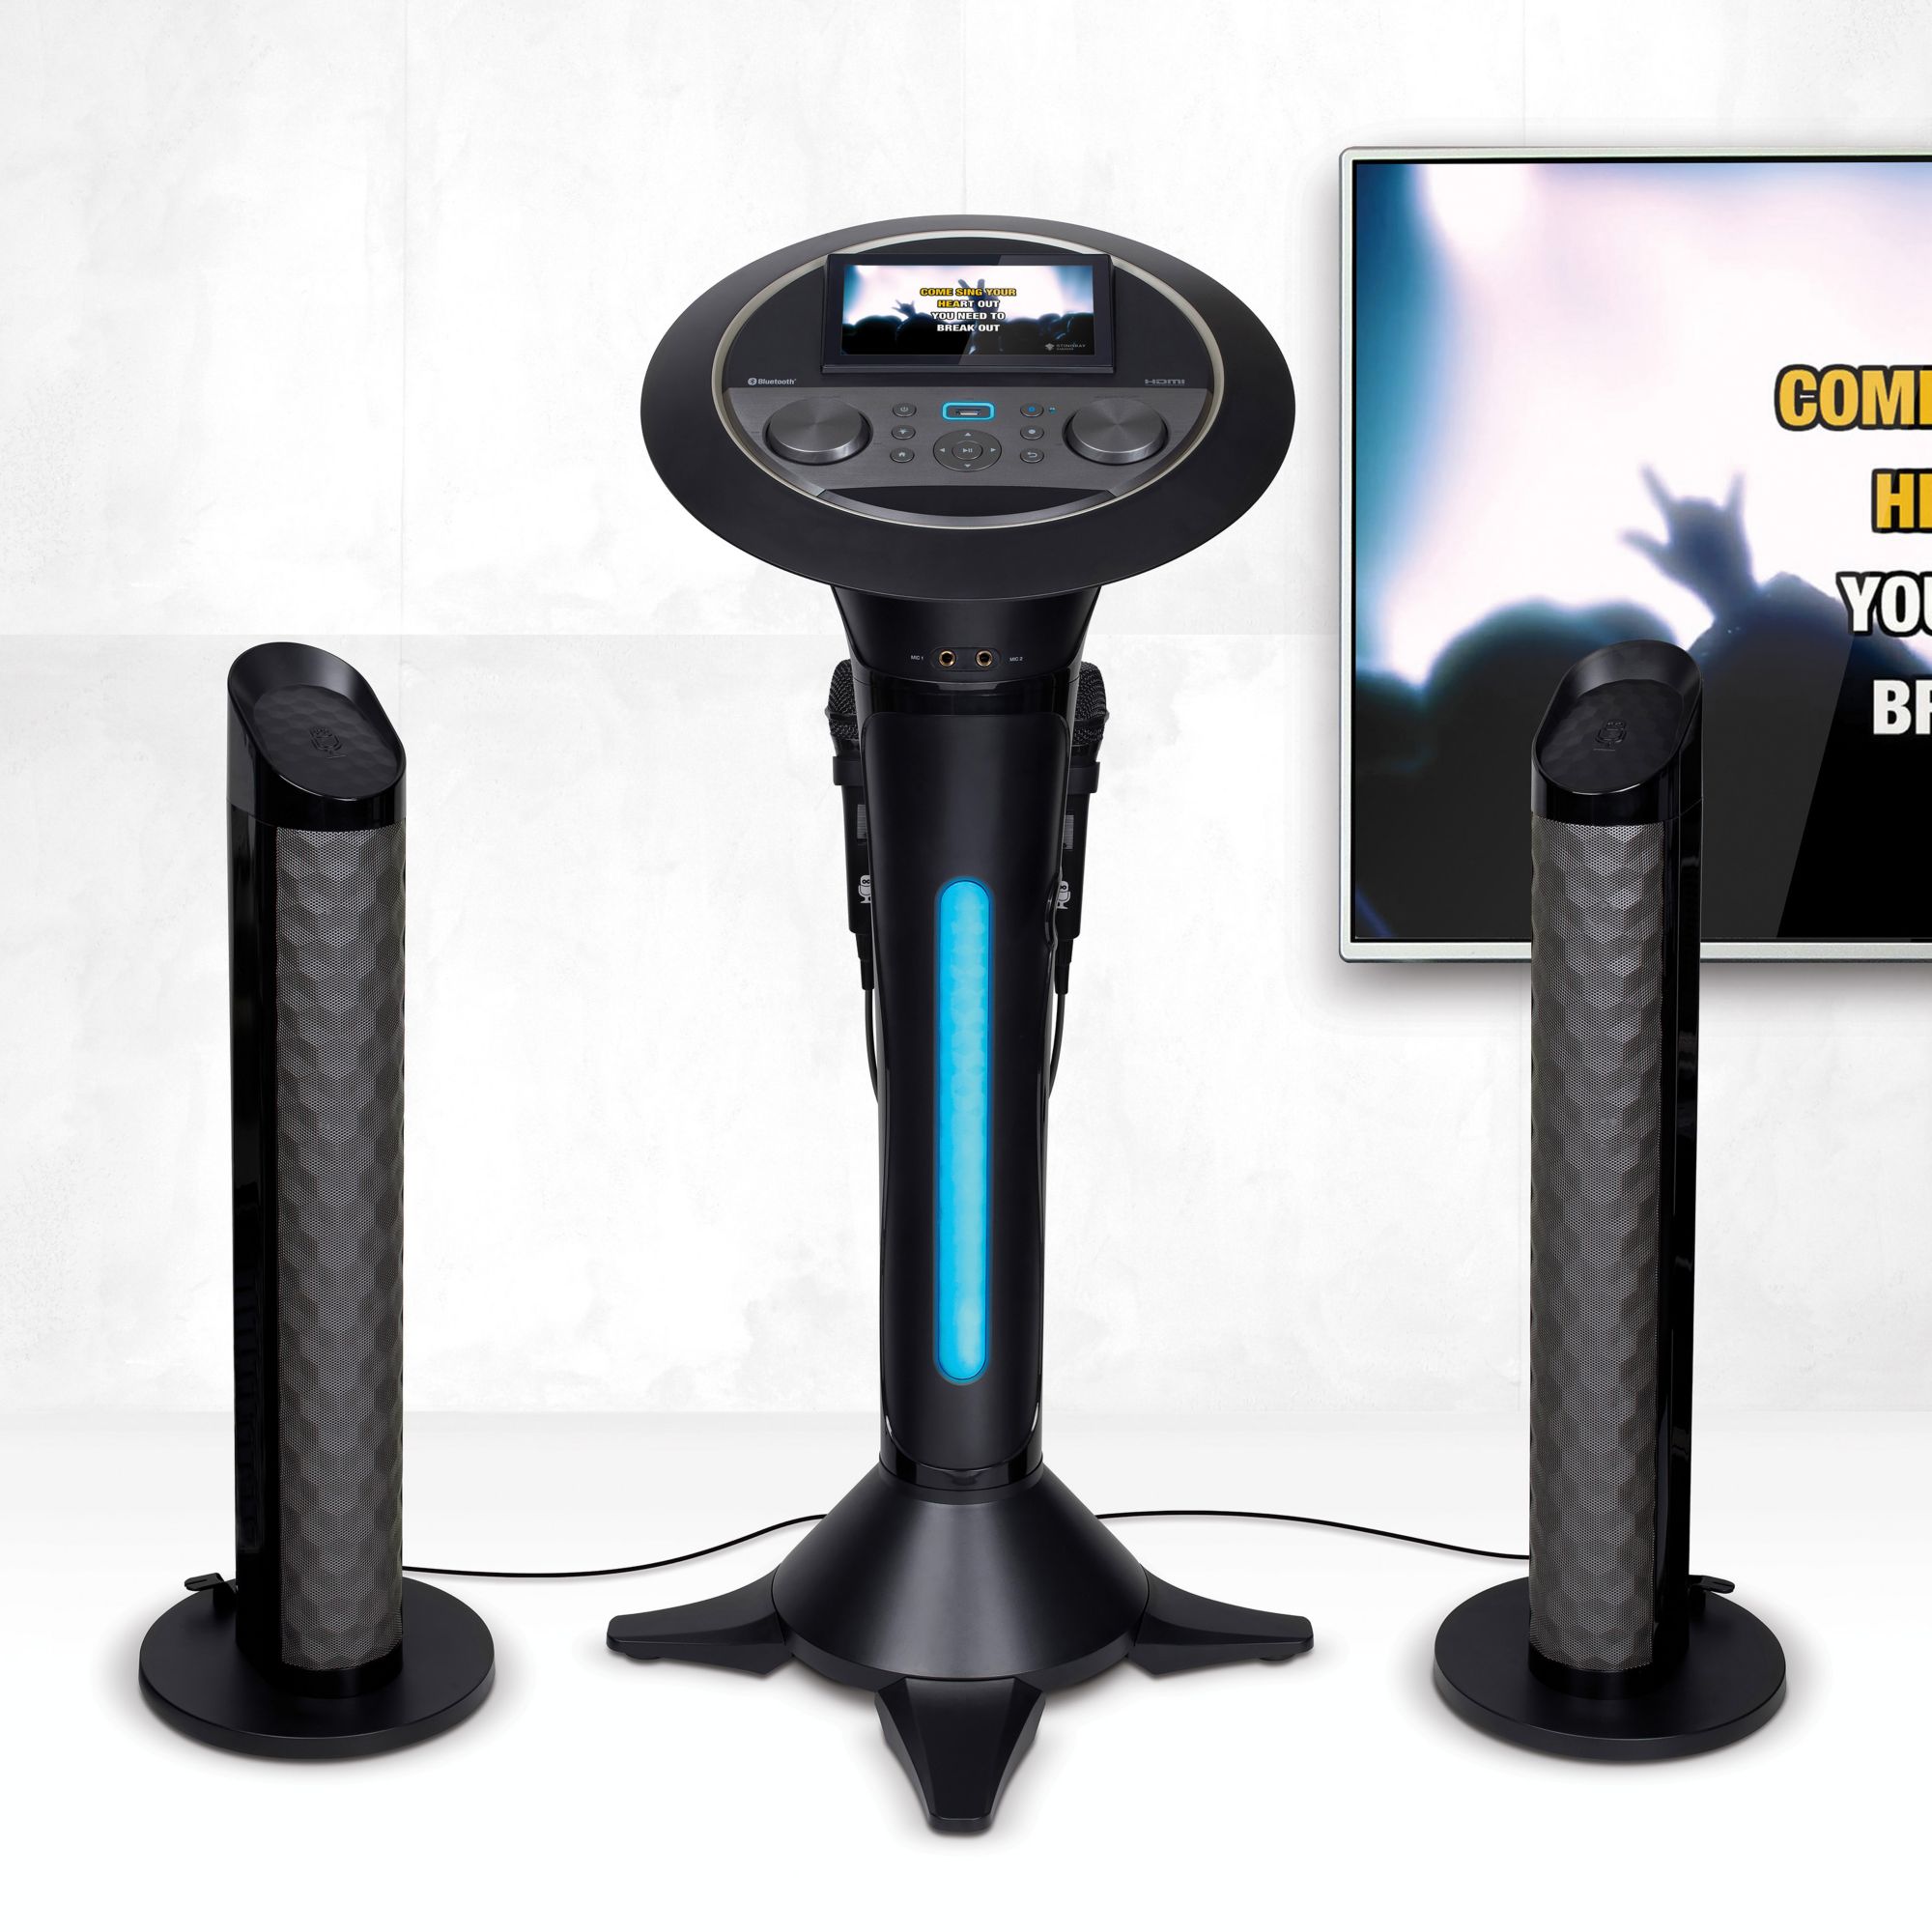 Home karaoke setup - everything you need for at home karaoke